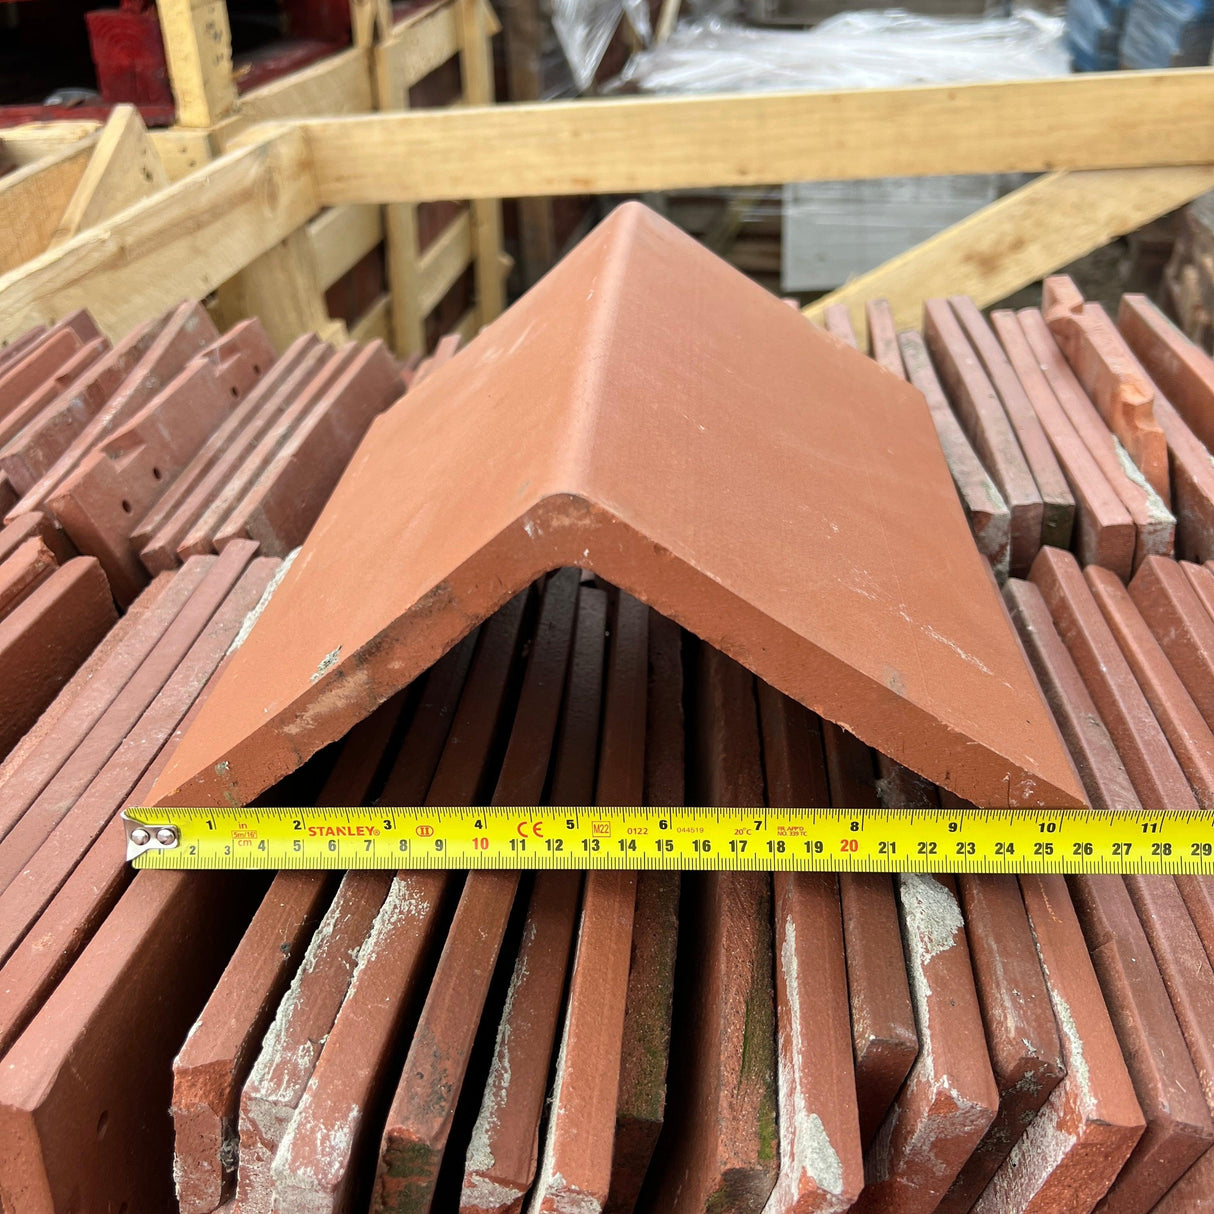 Nearly New Rosemary Red Triangle Ridge Roof Tile - Reclaimed Brick Company